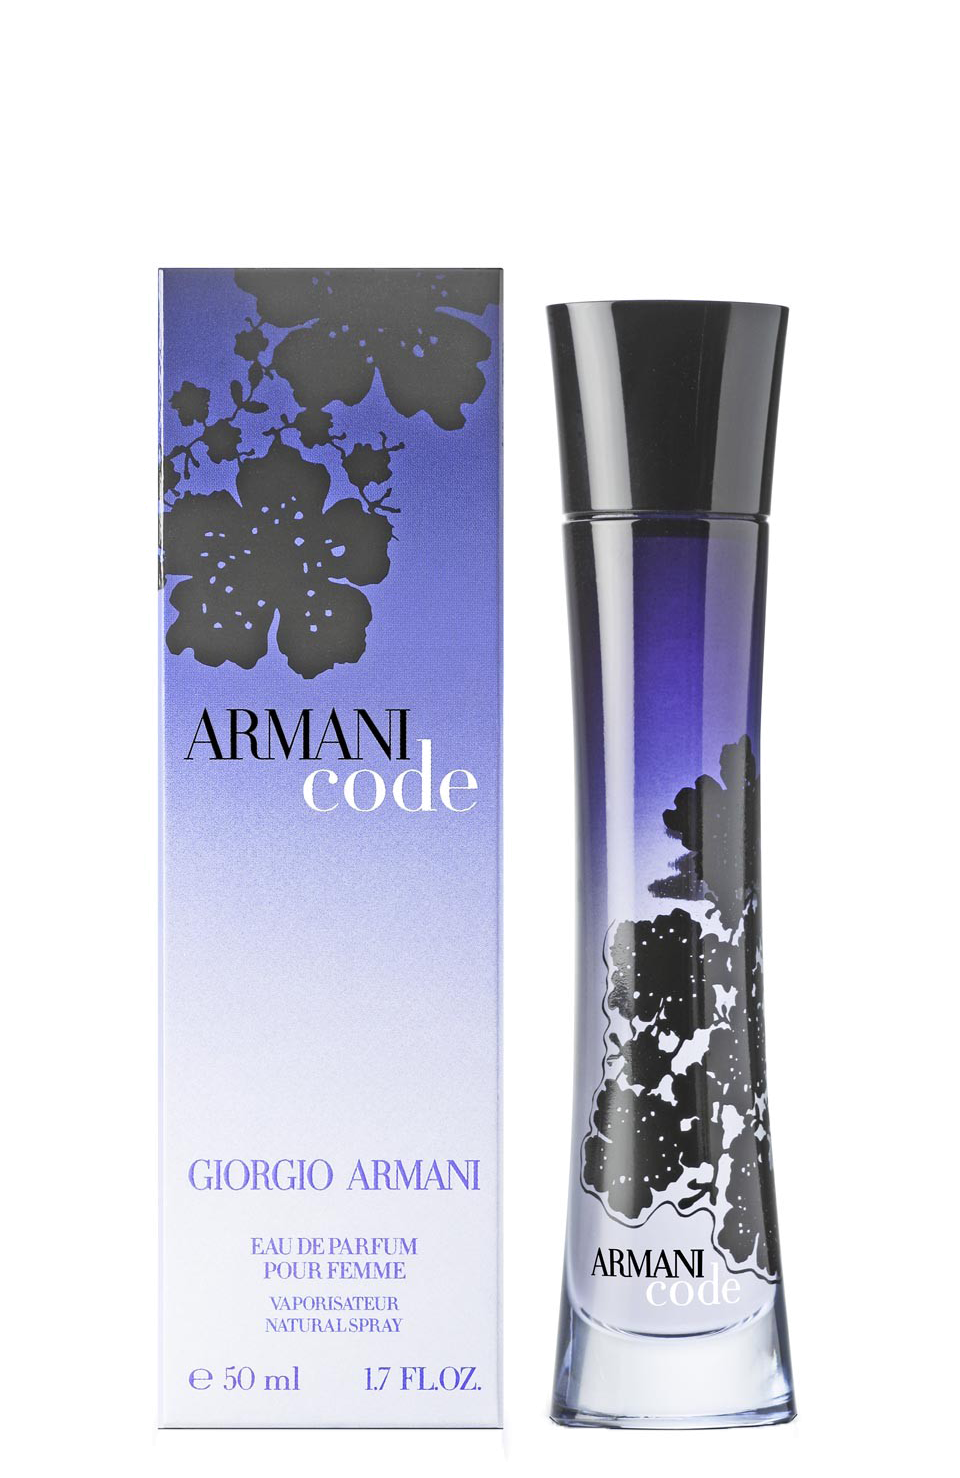 Armani women. Духи Giorgio Armani Armani code. Armani code Giorgio Armani женские. Armani code pour femme. Духи Armani code femme.